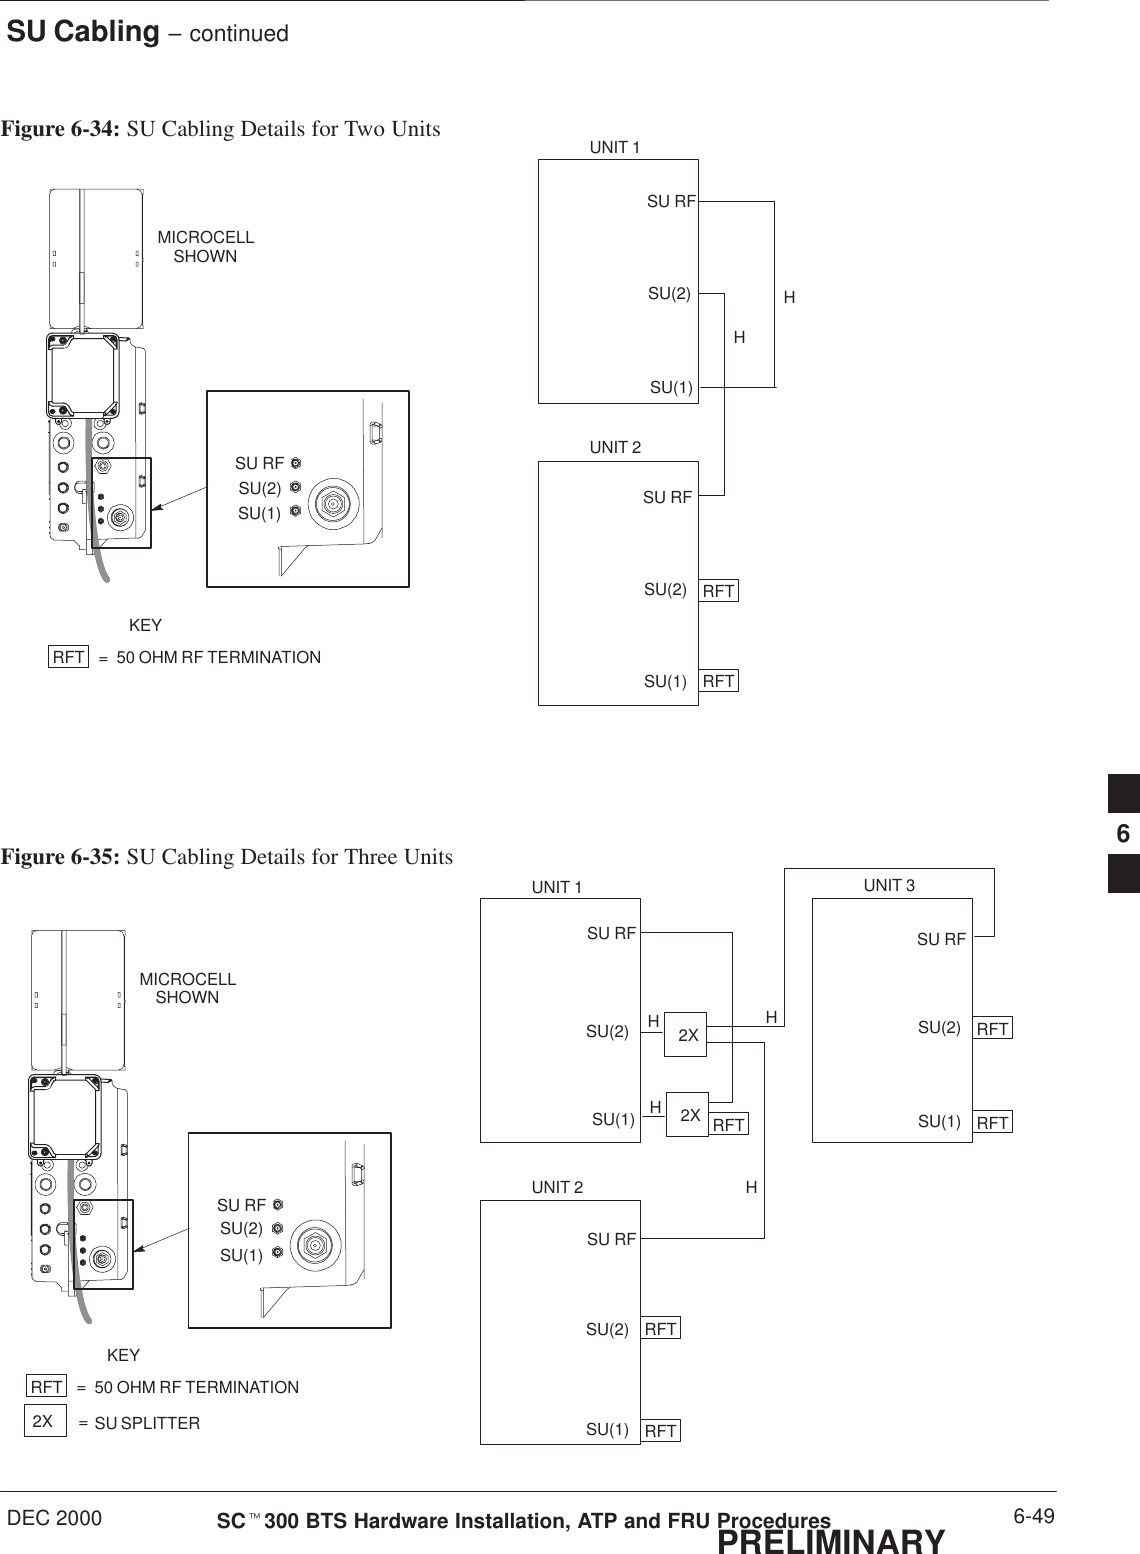 SU Cabling – continuedDEC 2000 6-49SCt300 BTS Hardware Installation, ATP and FRU ProceduresPRELIMINARYFigure 6-34: SU Cabling Details for Two Units UNIT 1UNIT 2MICROCELLSHOWNSU(2)SU(1)SU RFSU(2)SU(1)SU RFSU(2)SU(1)SU RFRFT =50 OHM RF TERMINATIONKEYRFTRFTHHFigure 6-35: SU Cabling Details for Three UnitsUNIT 1UNIT 2MICROCELLSHOWNSU(2)SU(1)SU RFSU(2)SU(1)SU RFSU(2)SU(1)SU RFUNIT 3SU(2)SU(1)SU RF2XRFT2XRFT =50 OHM RF TERMINATION2X =SU SPLITTERKEYRFTRFTRFTRFTHHHH6